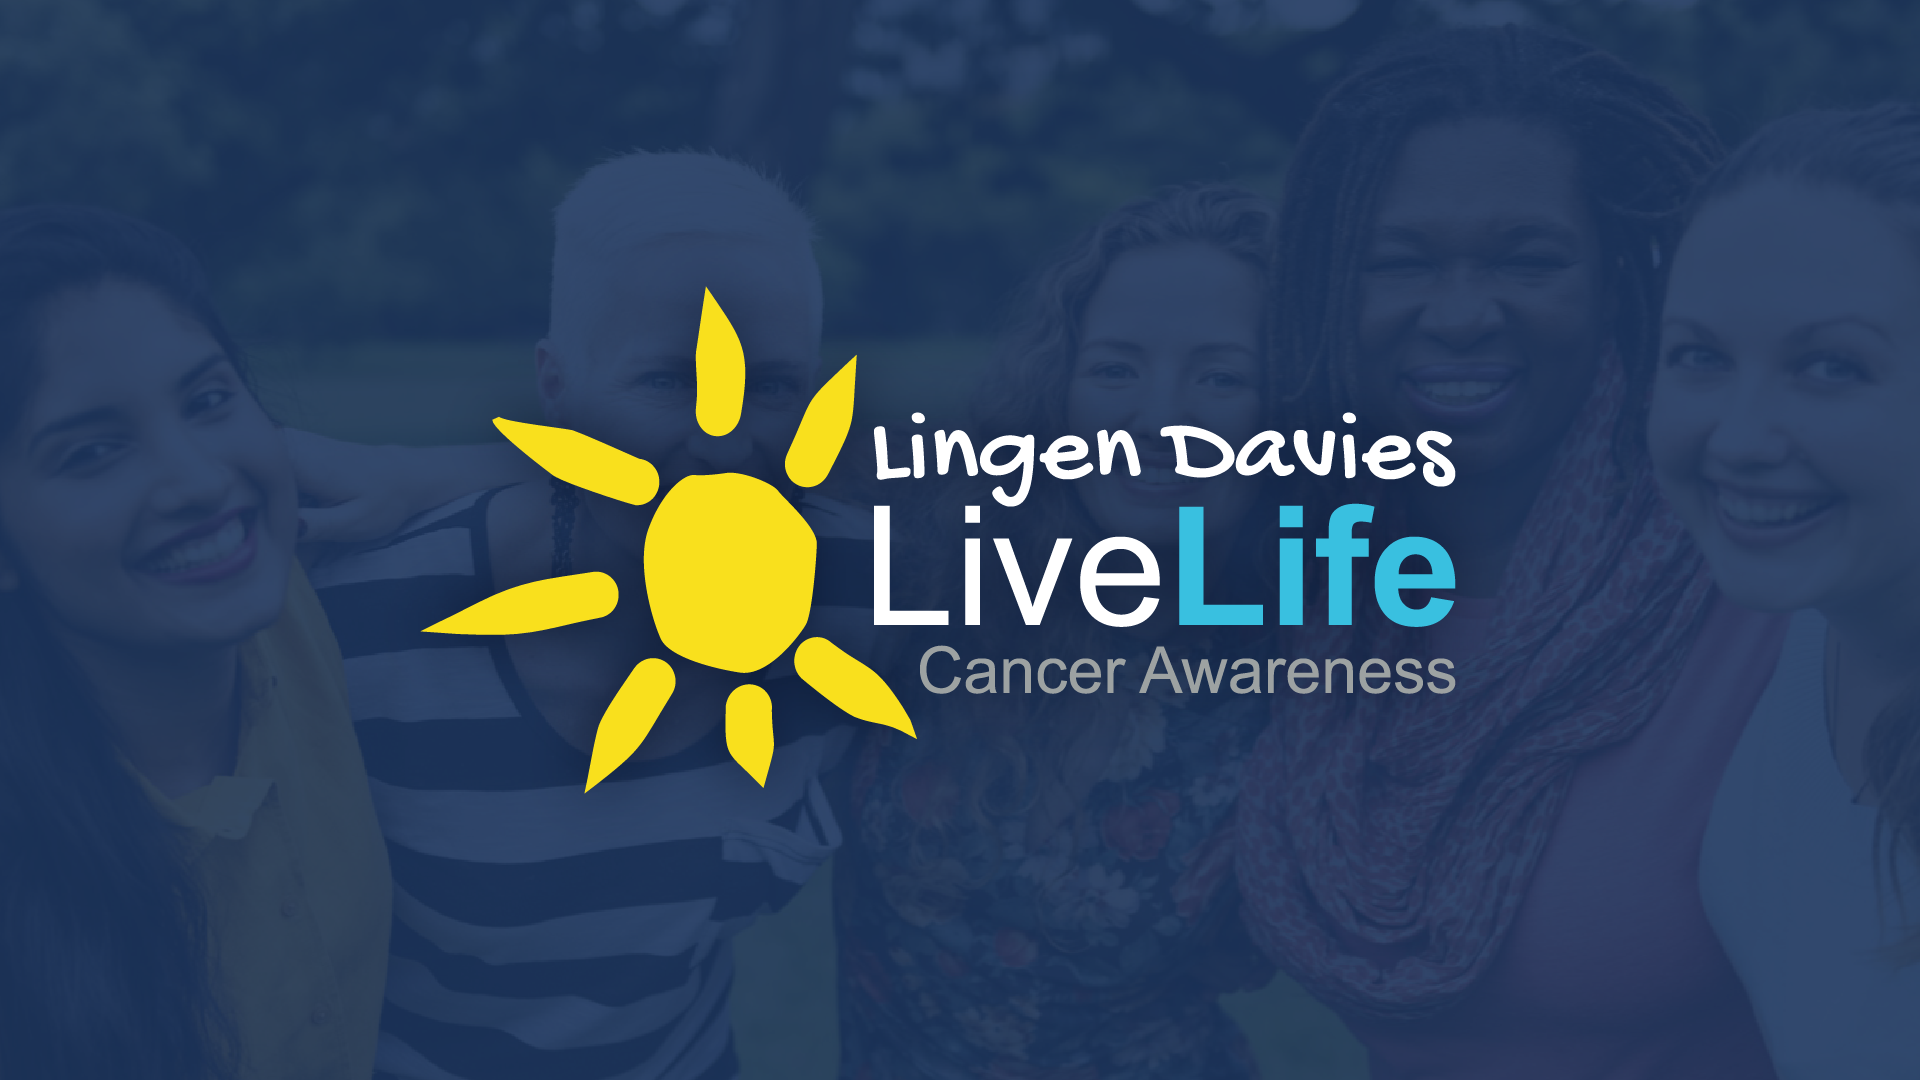 Live Life Cancer Awareness